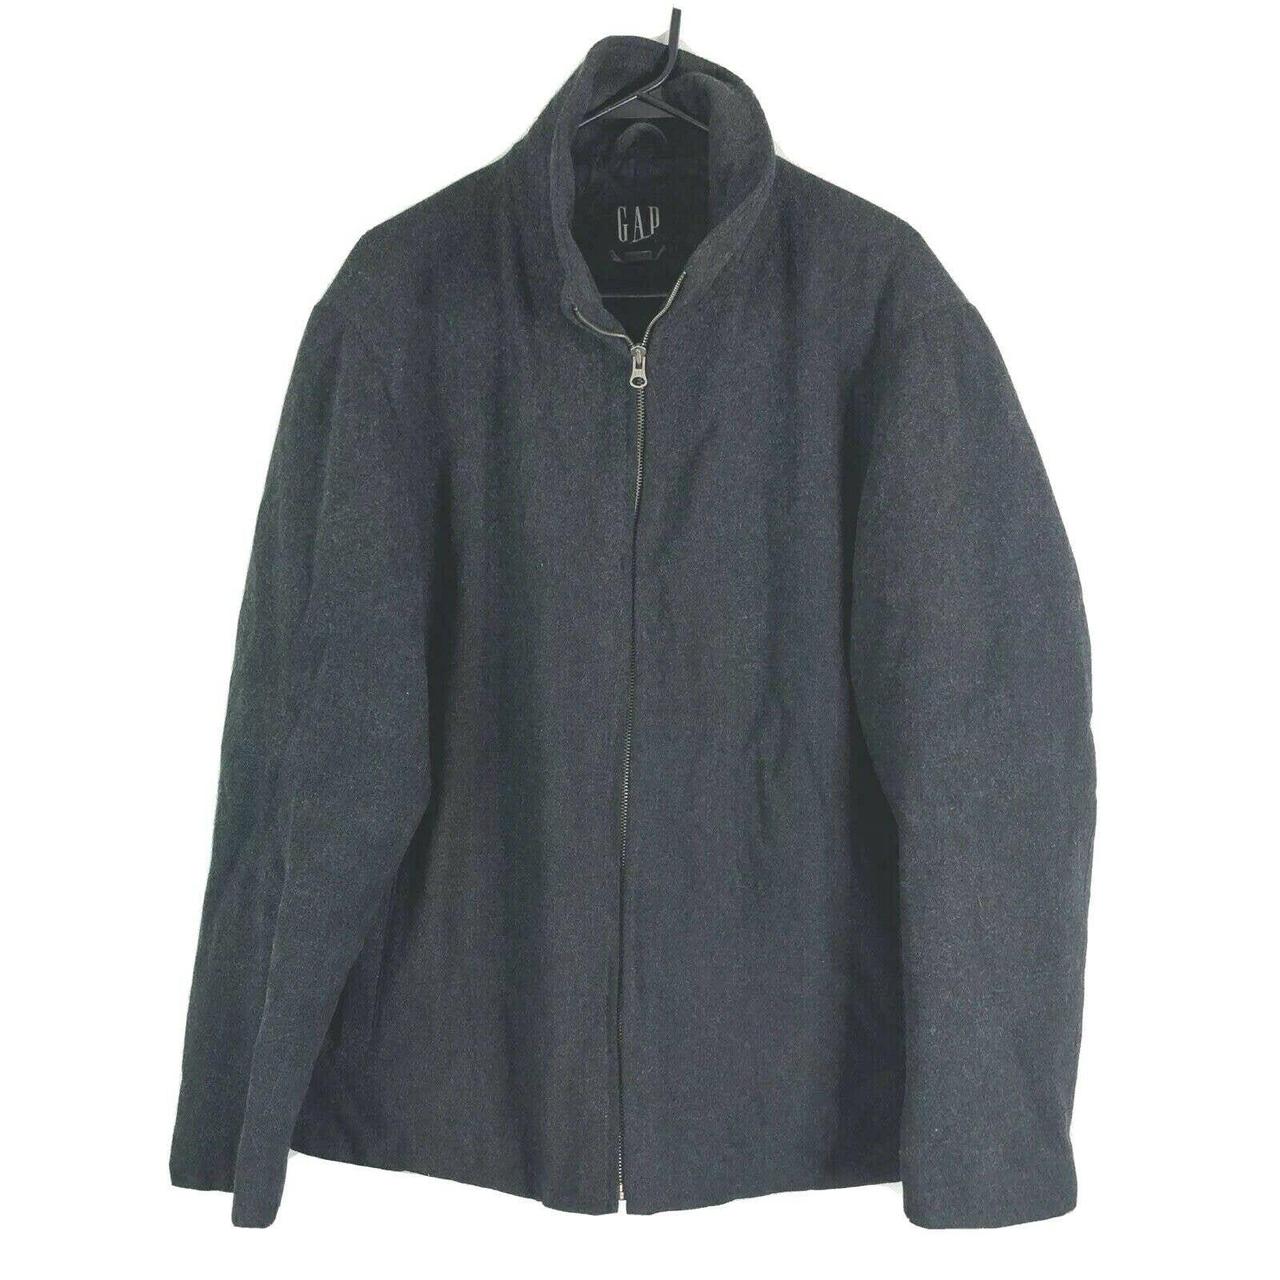 Vintage Gap Pea Coat Jacket Mens Medium Black Gray... - Depop